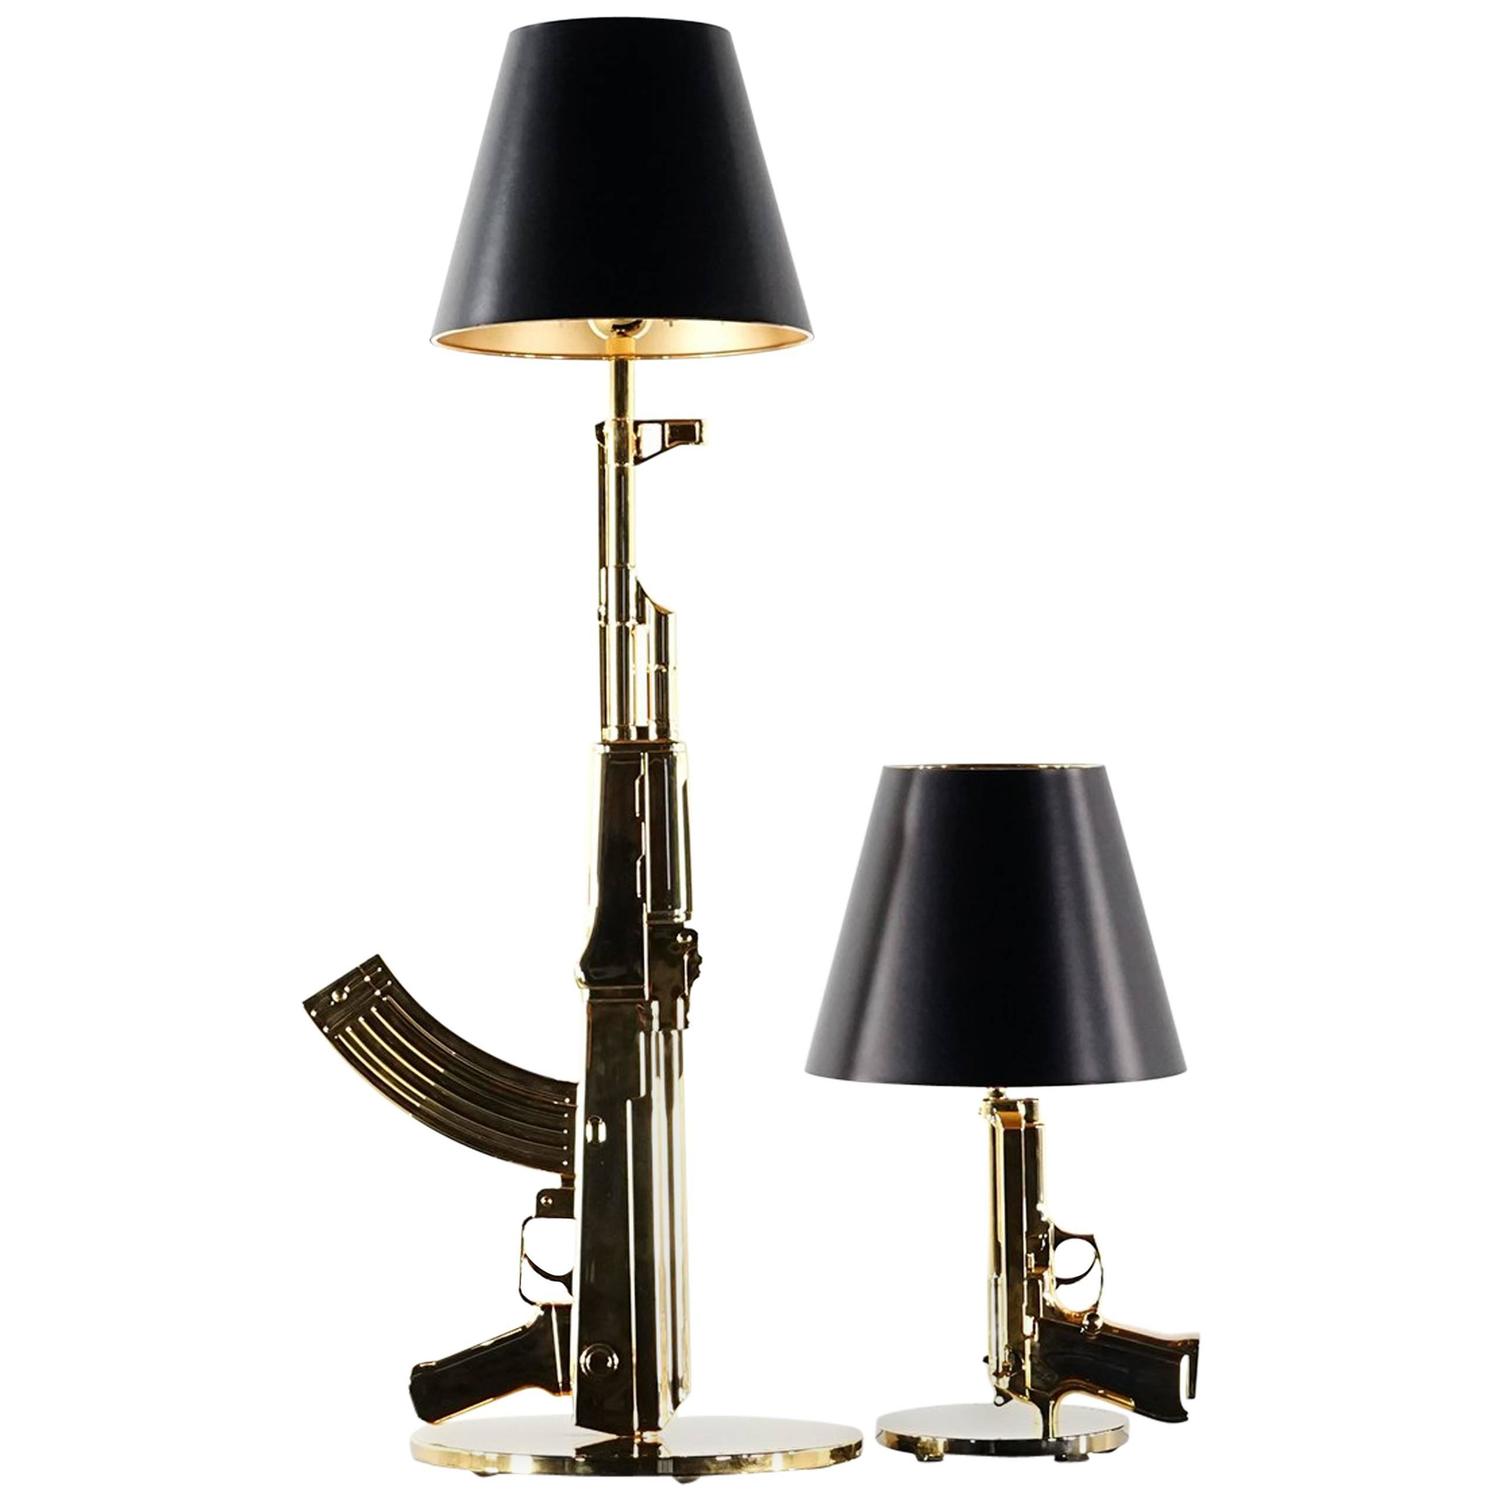 Starck Gun Lamp - 6 For Sale on 1stDibs | philippe starck gun lamp, gun  lamps, gold gun lamp